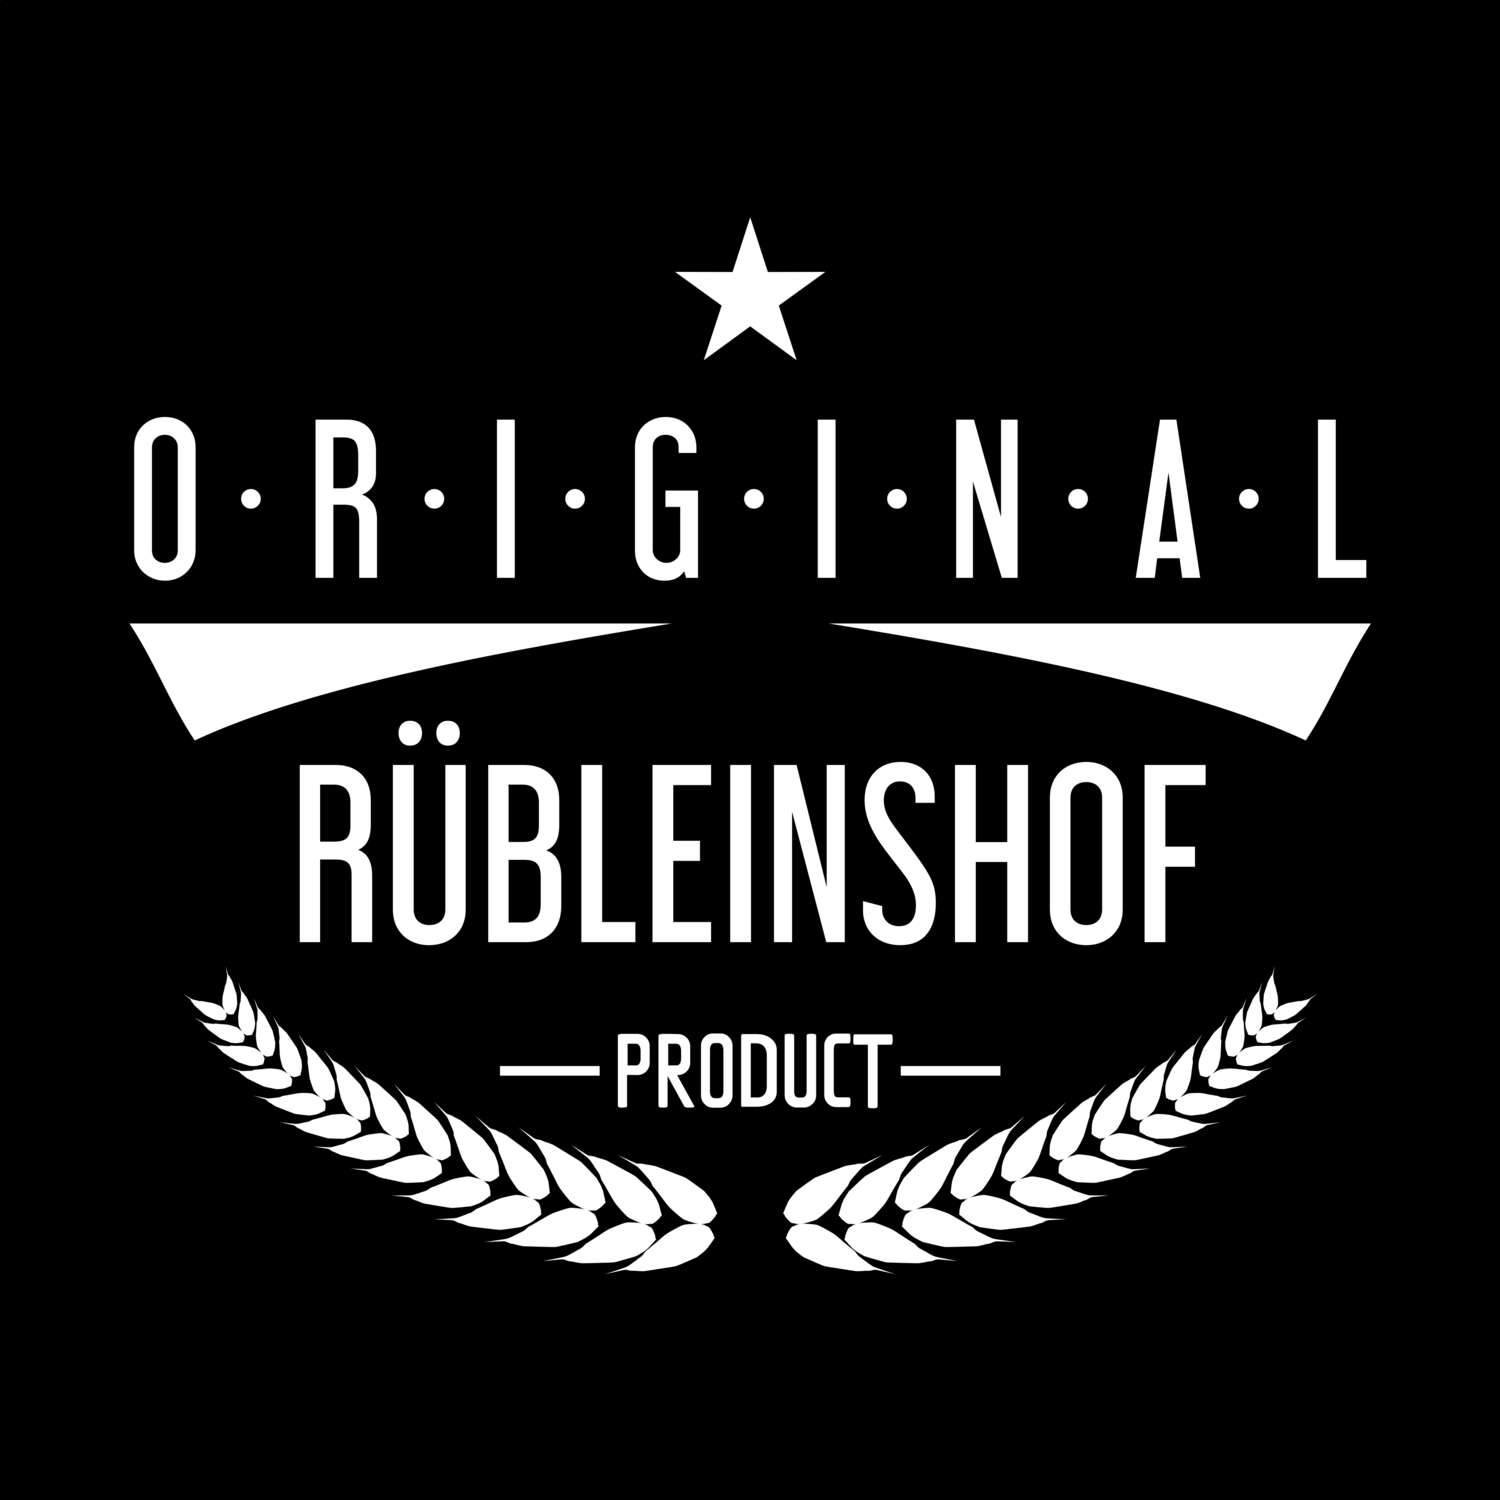 Rübleinshof T-Shirt »Original Product«